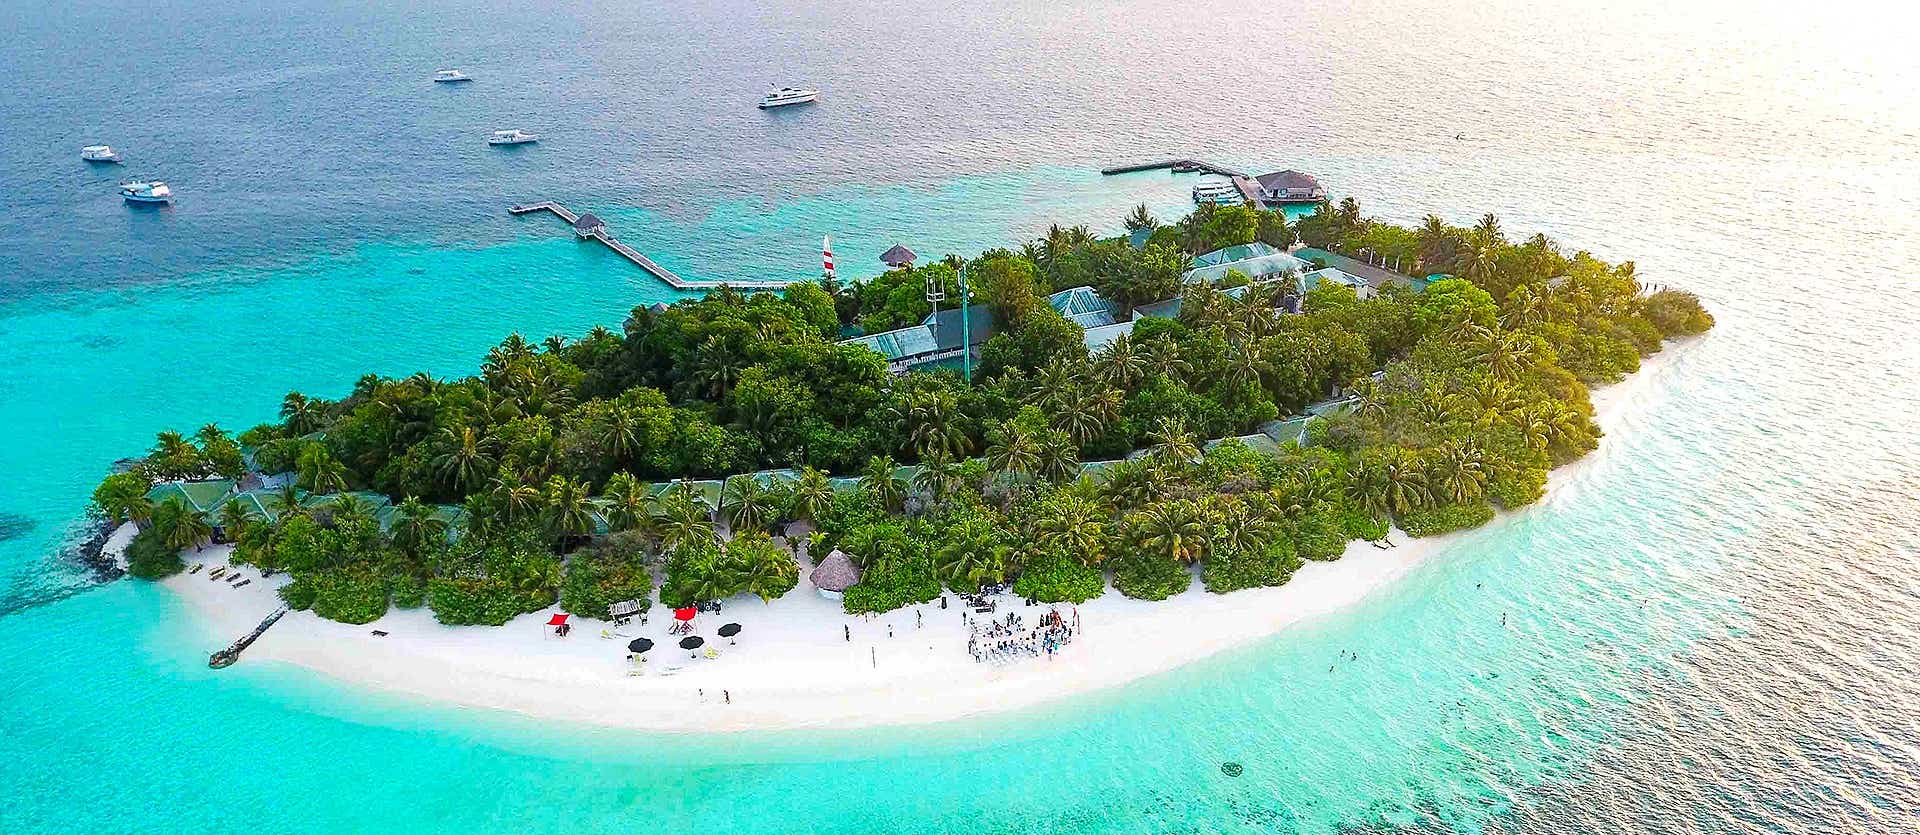 Eriyadu Island Resort <span class="iconos separador"></span> Maldives